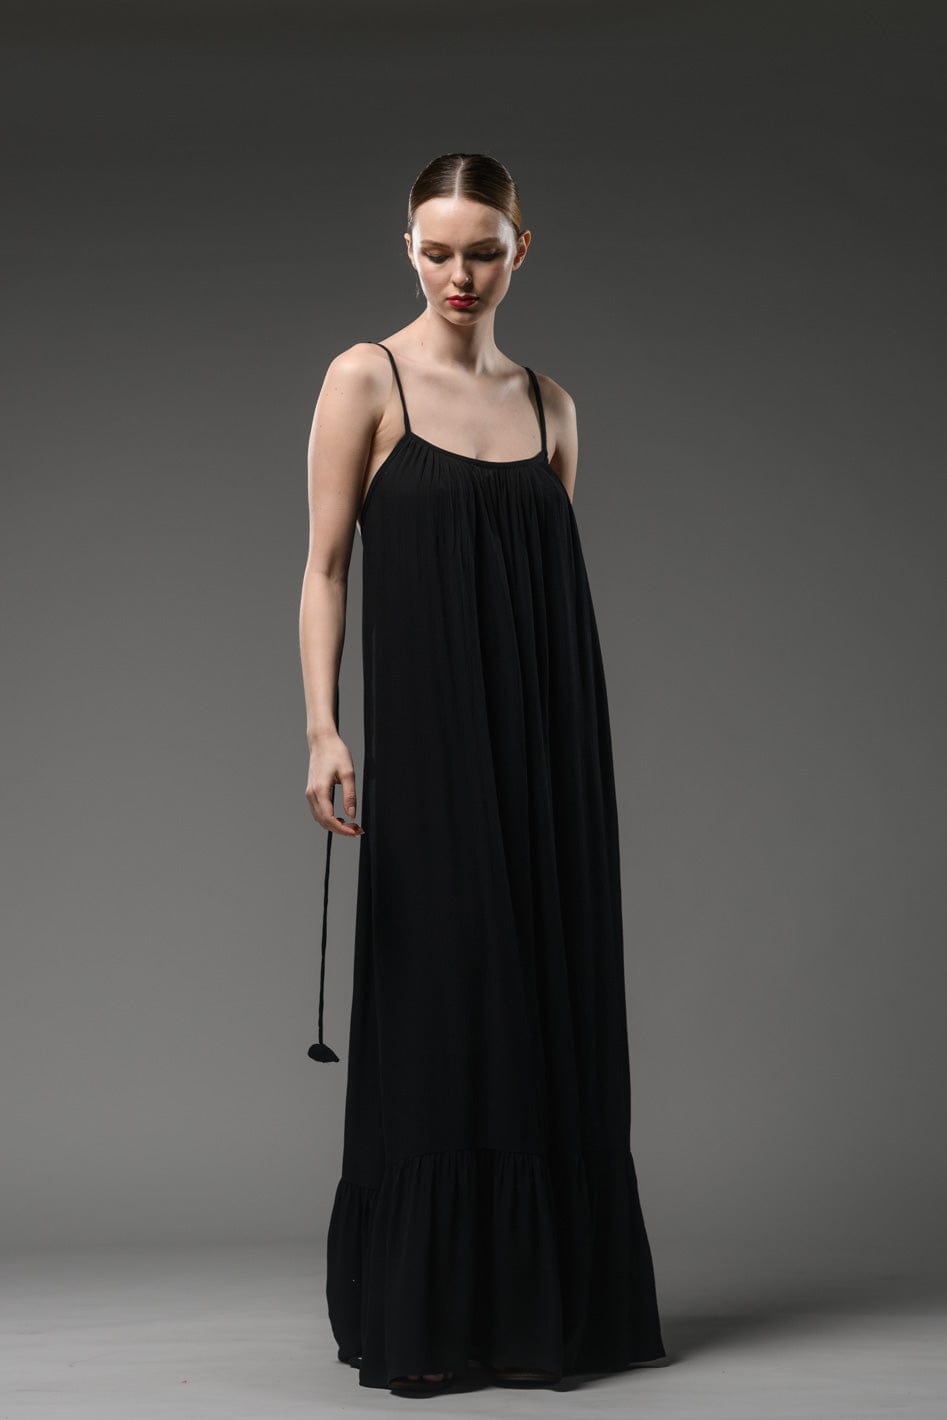 Sexy Elegant Black Backless Dress